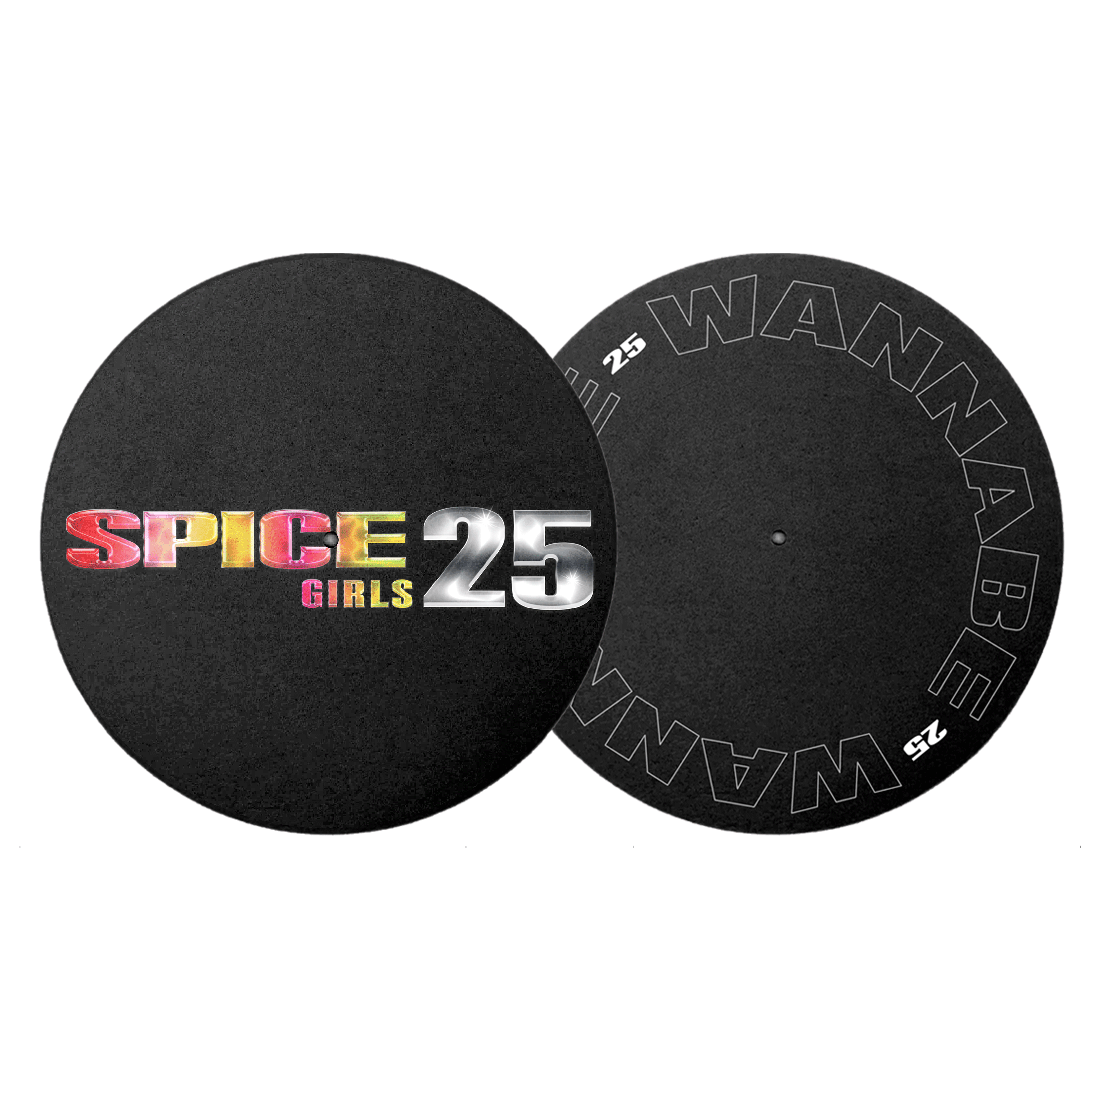 Spice Girls - Spice 25 Slipmat